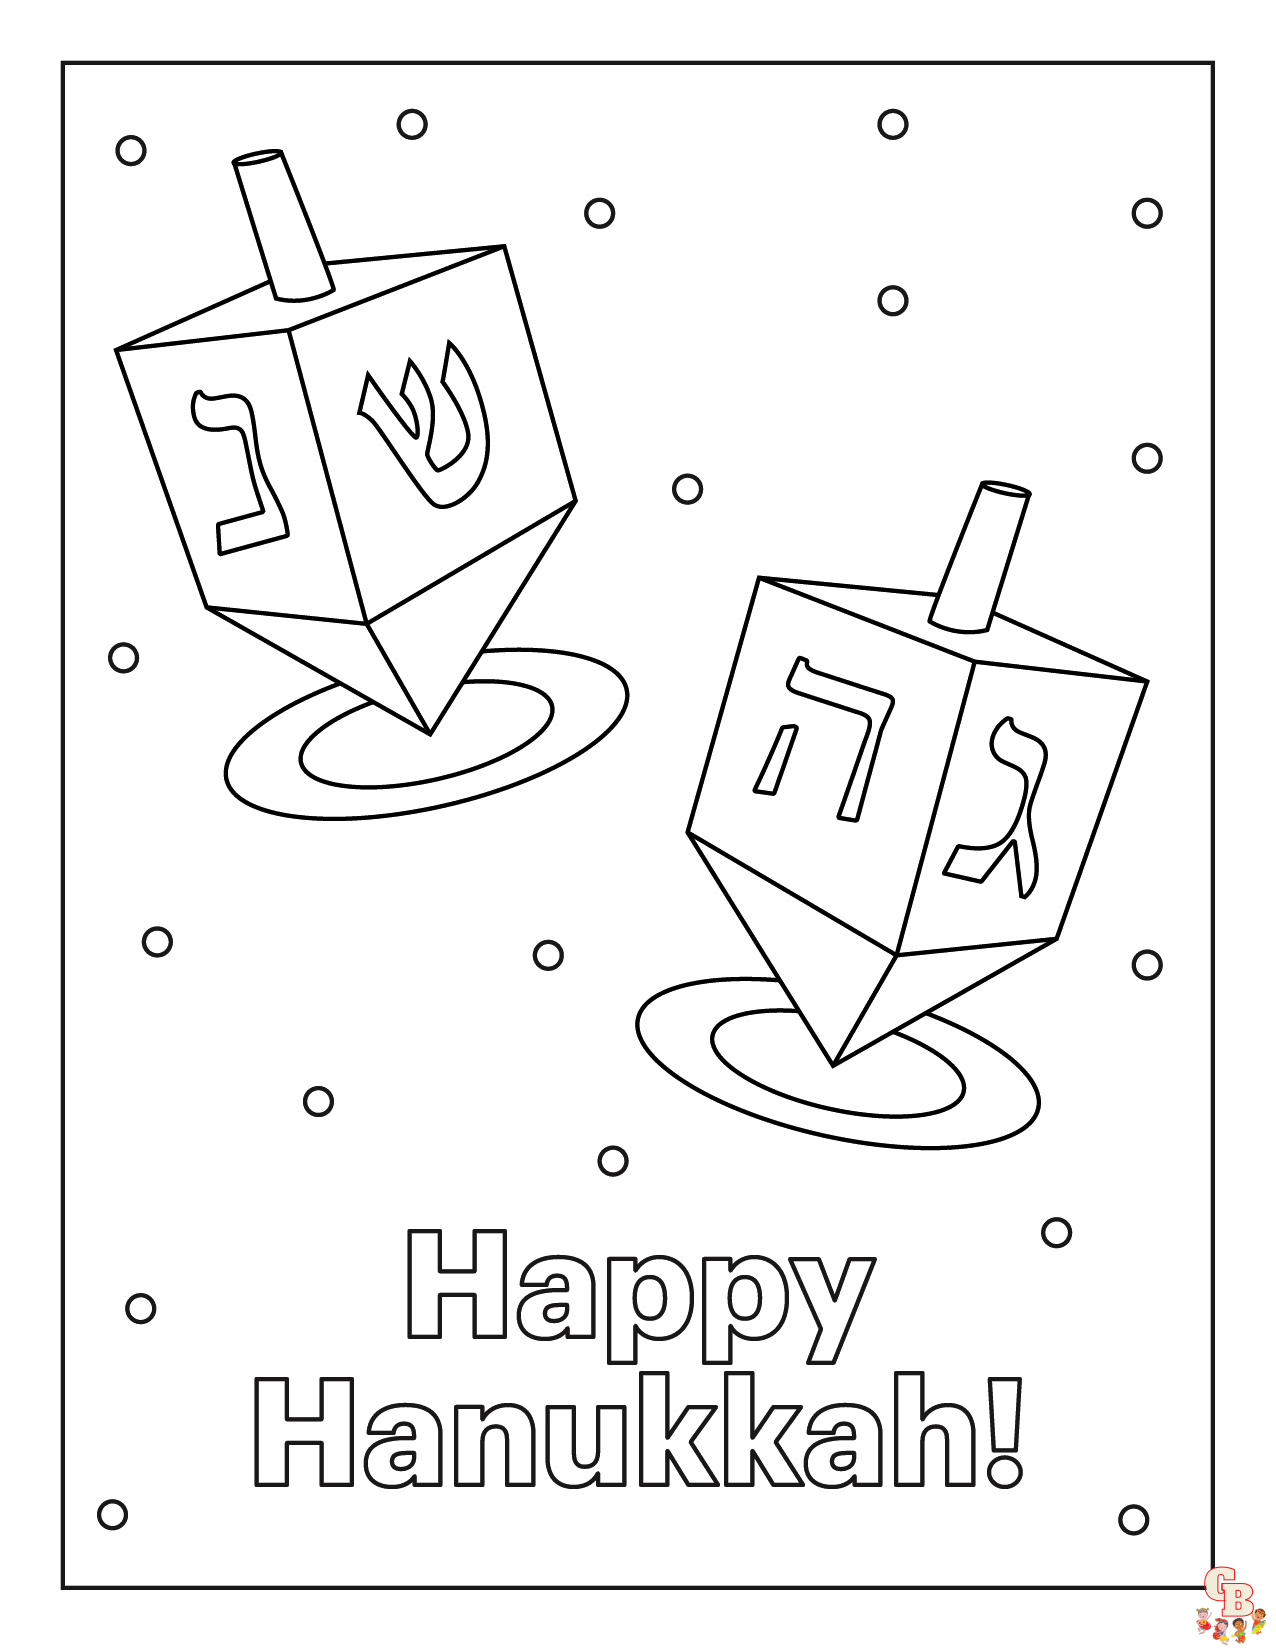 Hanukkah Coloring Pages Coloring Pages 16